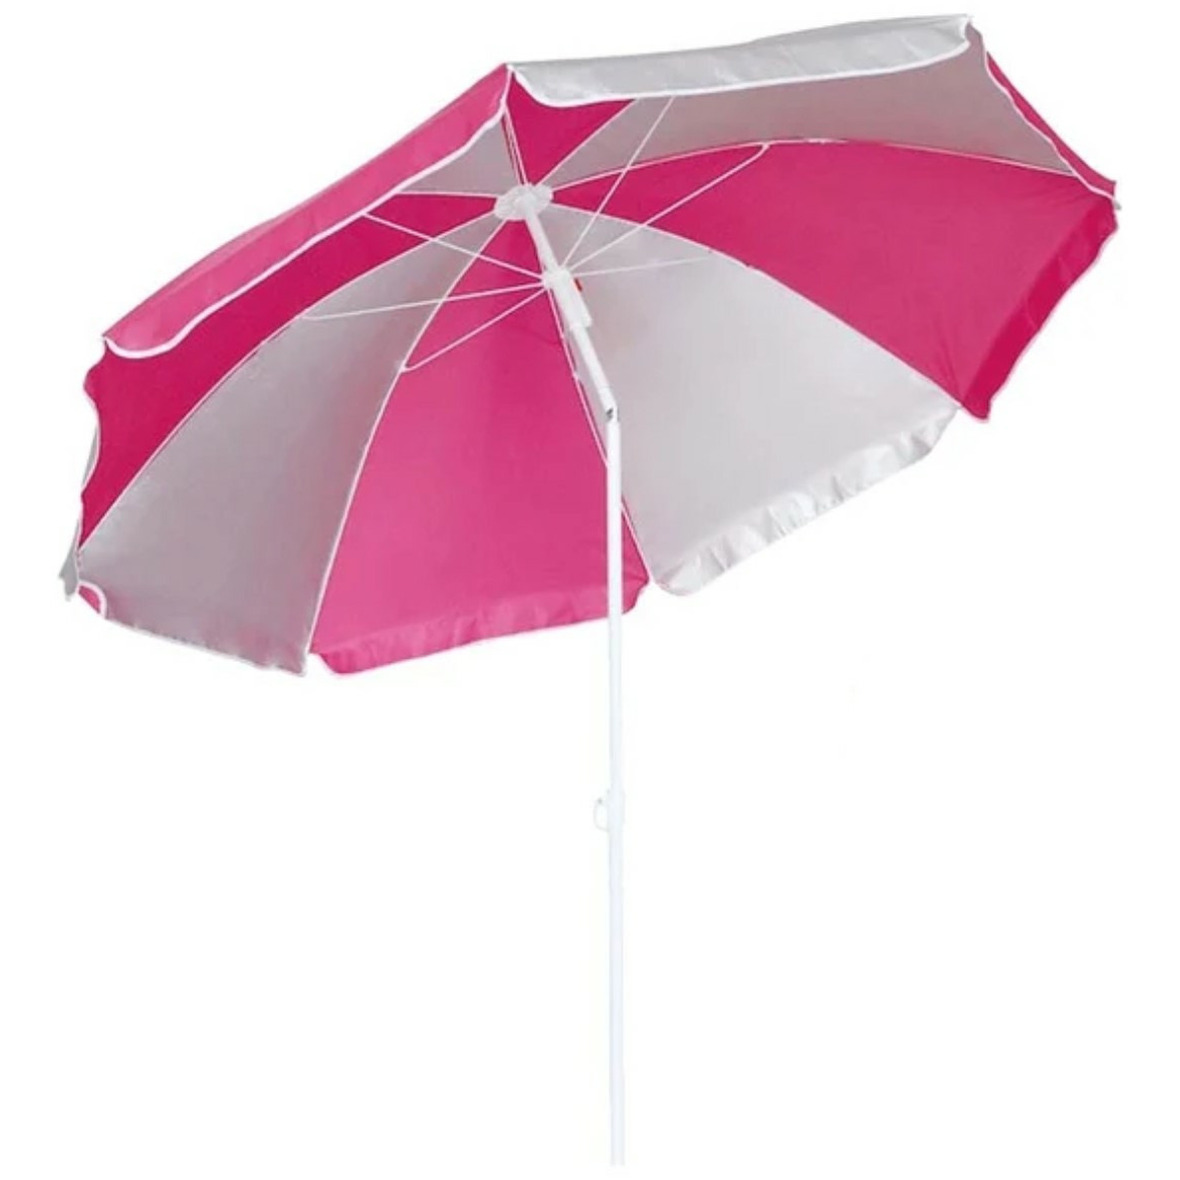 Merkloos Parasol - roze/wit - D120 cm - UV-bescherming - incl. draagtas -